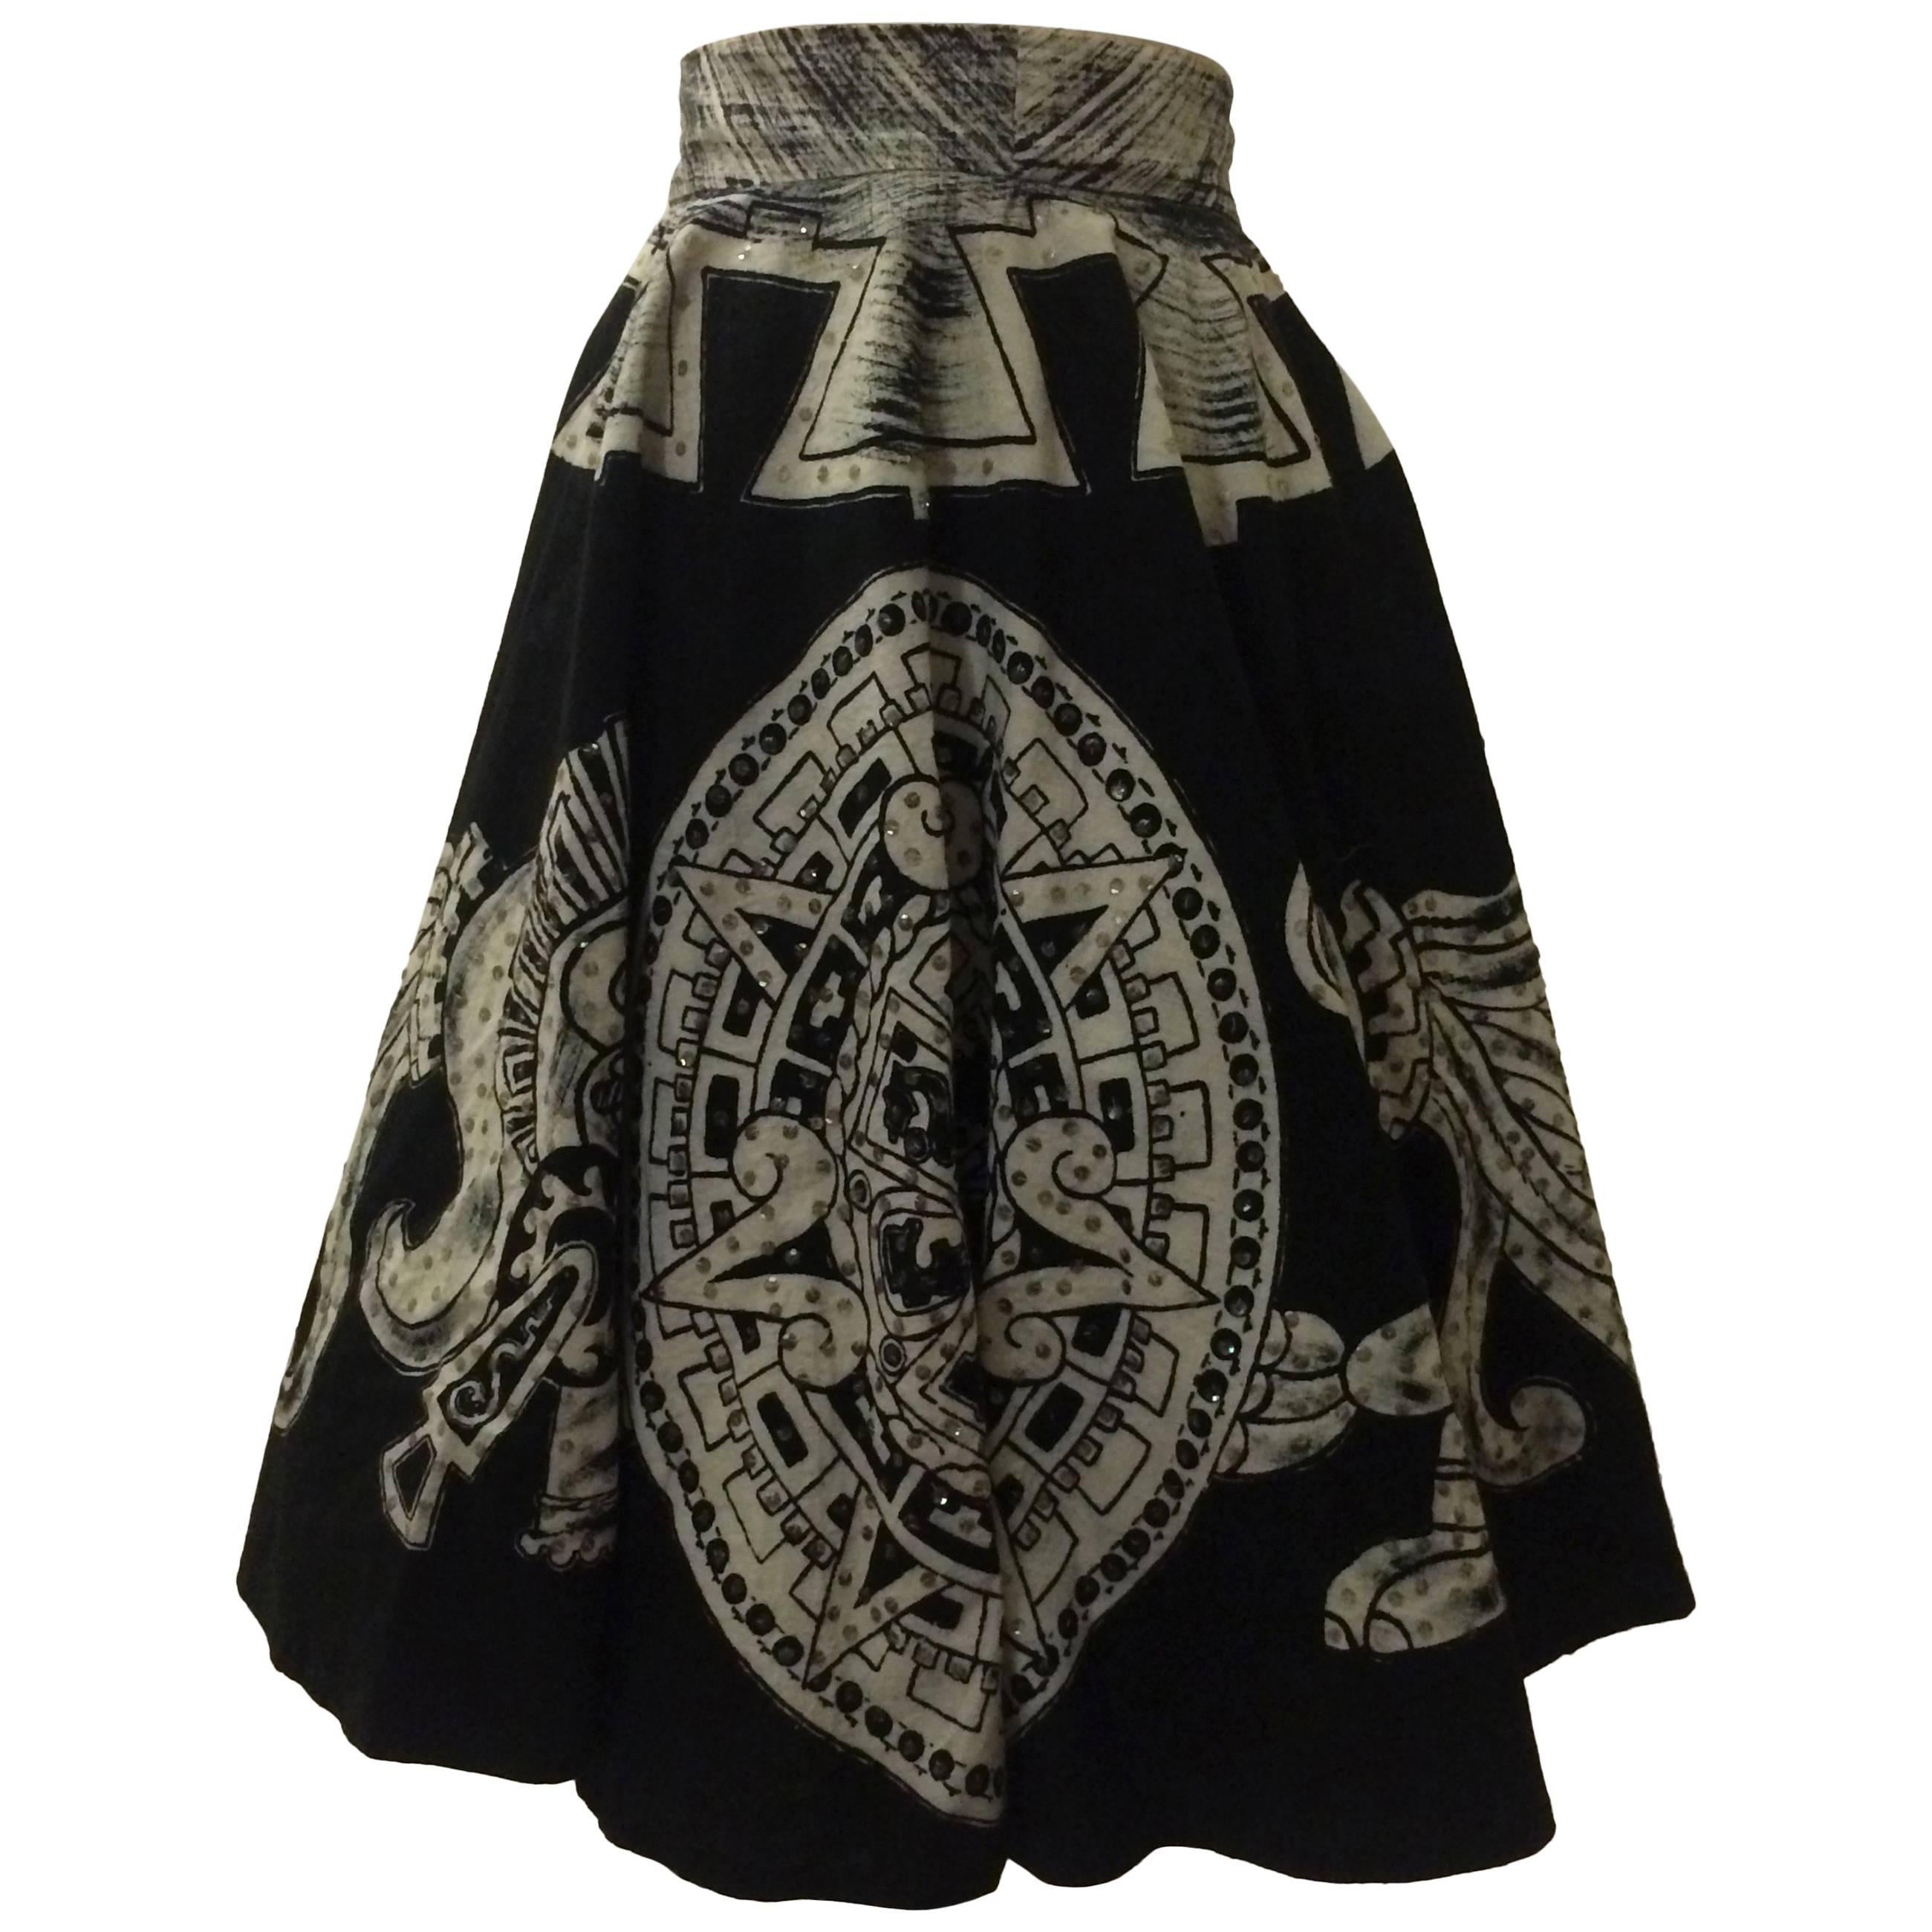 Aztec Calendar Warrior Vintage Black White Circle Tourist Souvenir Skirt, 1950s 